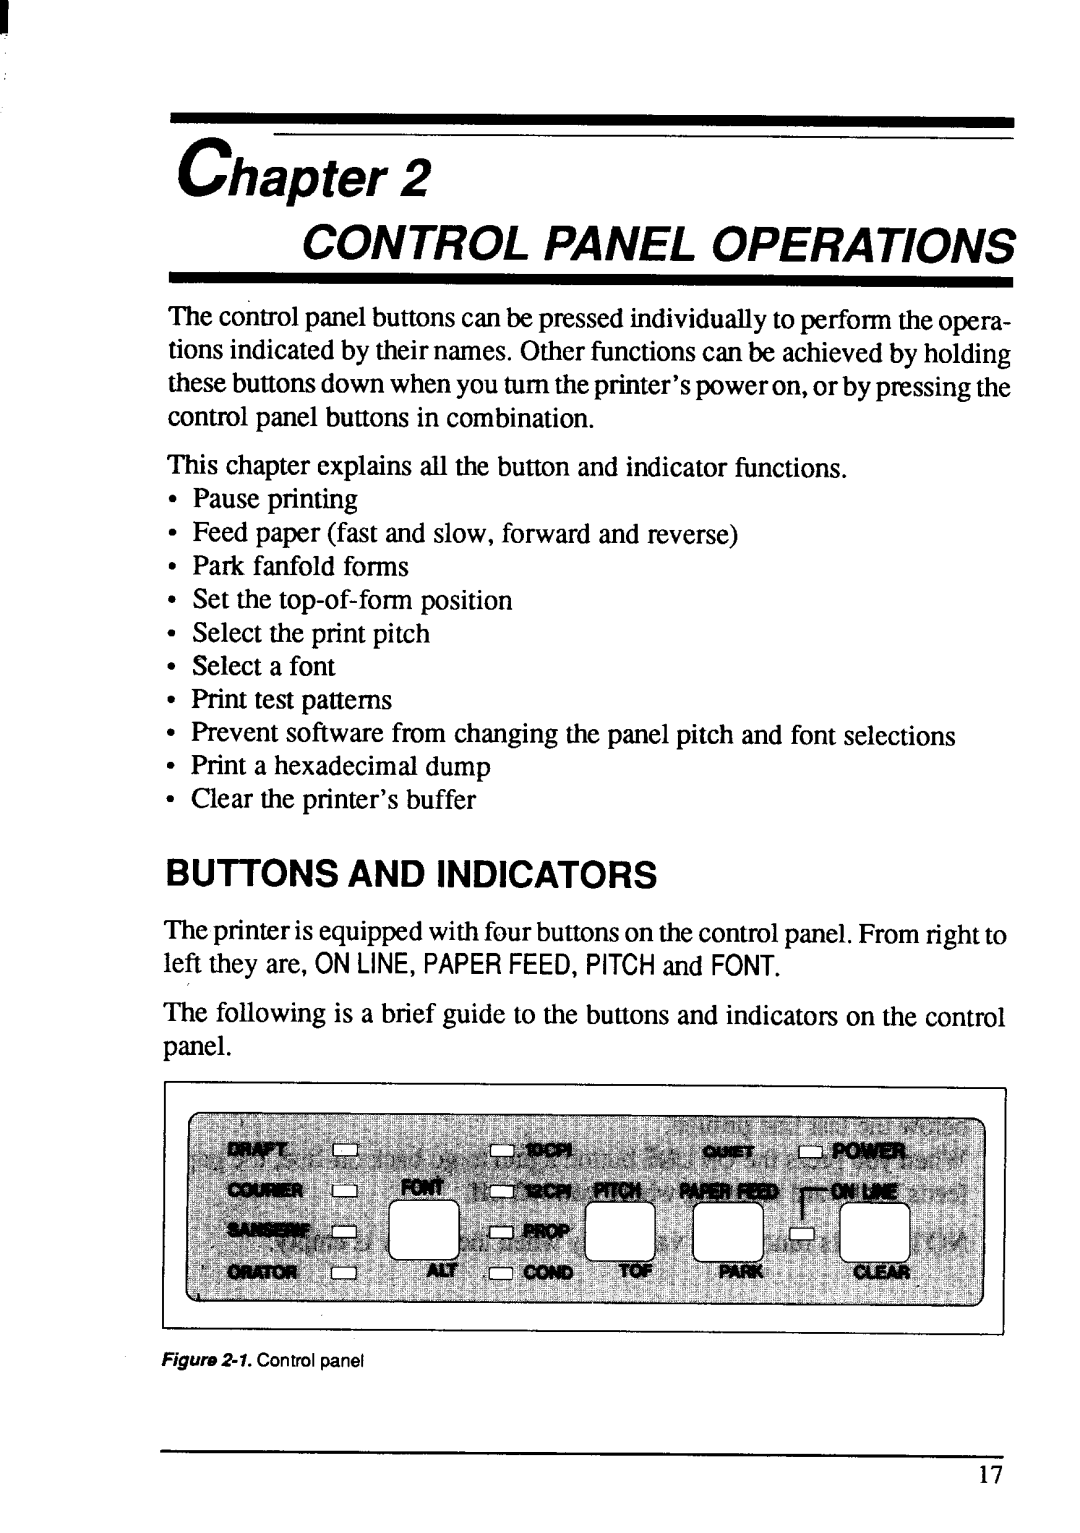 Star Micronics NX-1001 manual Control Panel Operations, F Z C p 